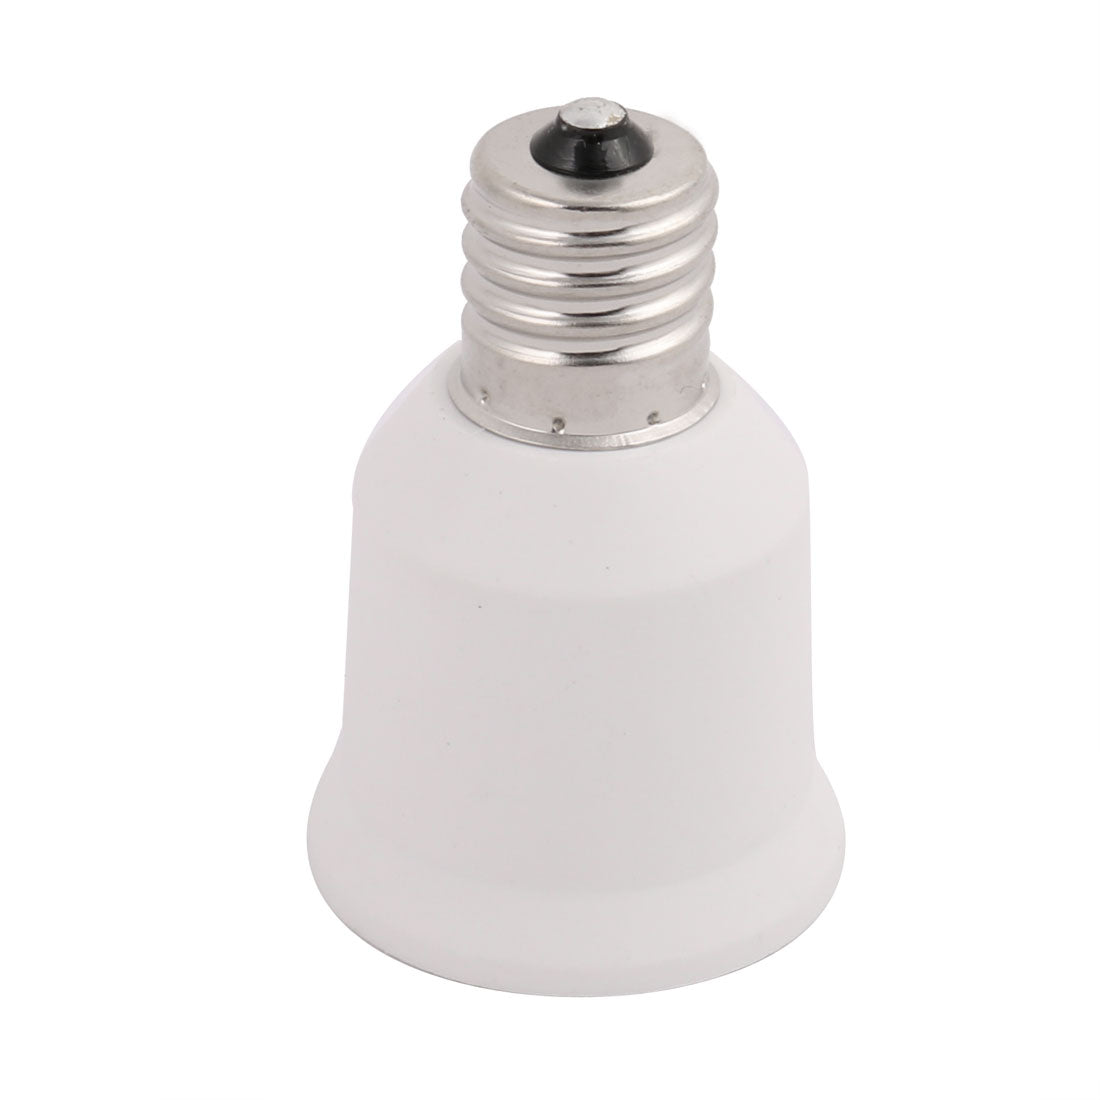 uxcell Uxcell 10Pcs E17 to E26 Extender Adapter Converter Lamp Bulb Socket Holder 55mm Height